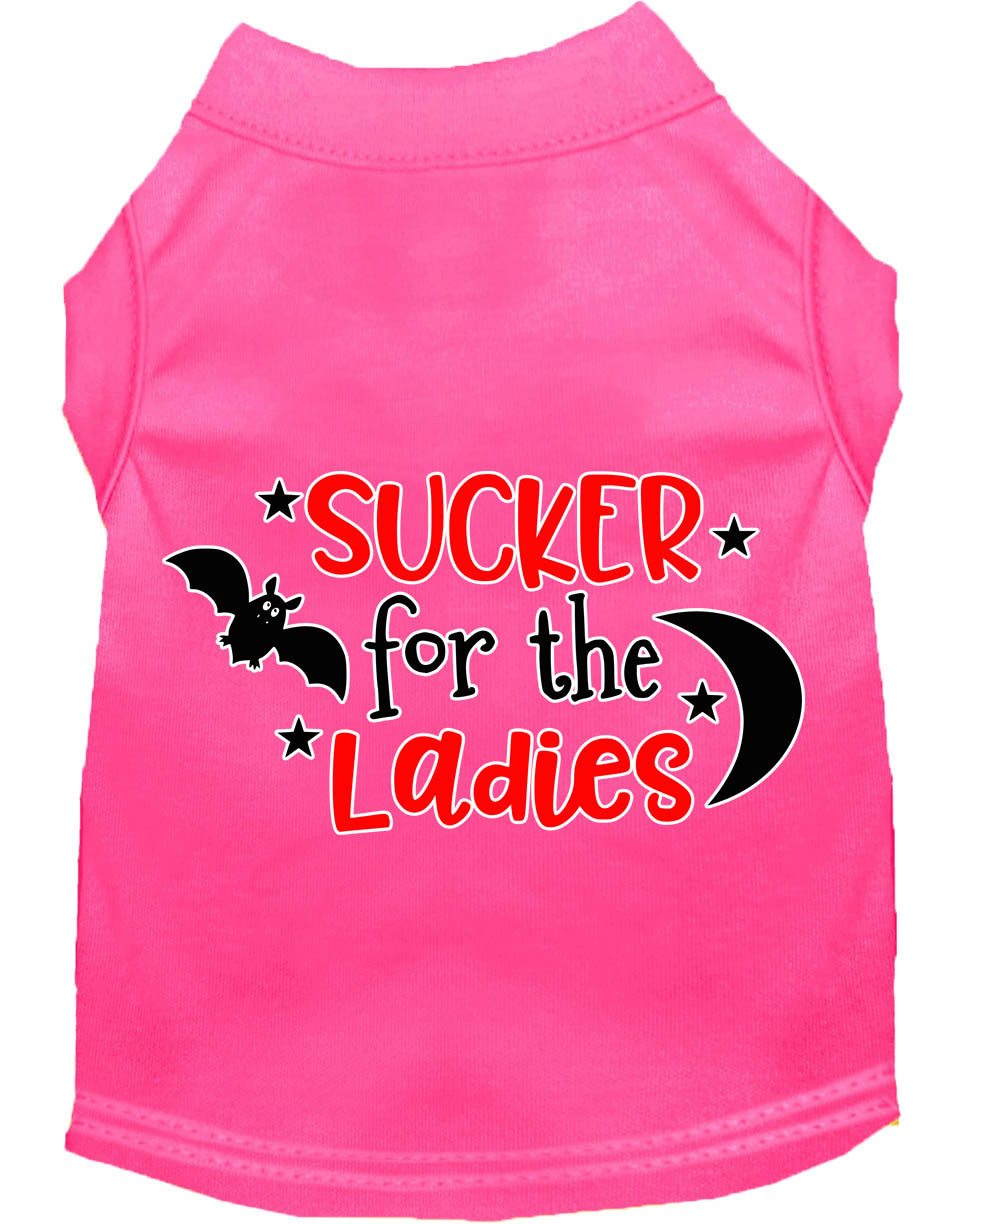 Sucker for the Ladies Screen Print Dog Shirt Bright Pink XXL